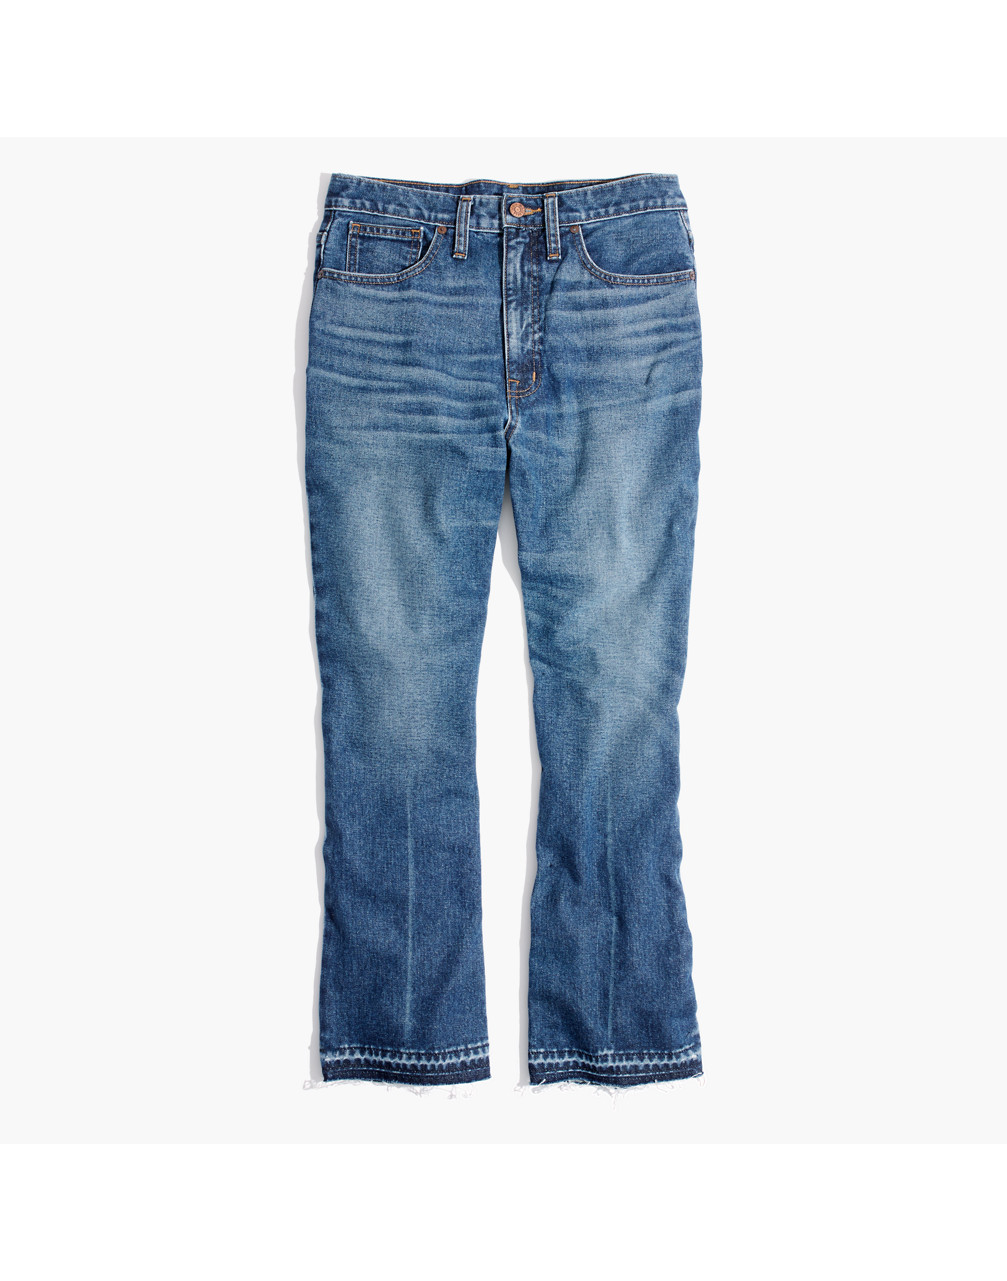 MWTall Retro Crop Bootcut Jeans in Callahan Wash | DailyMail